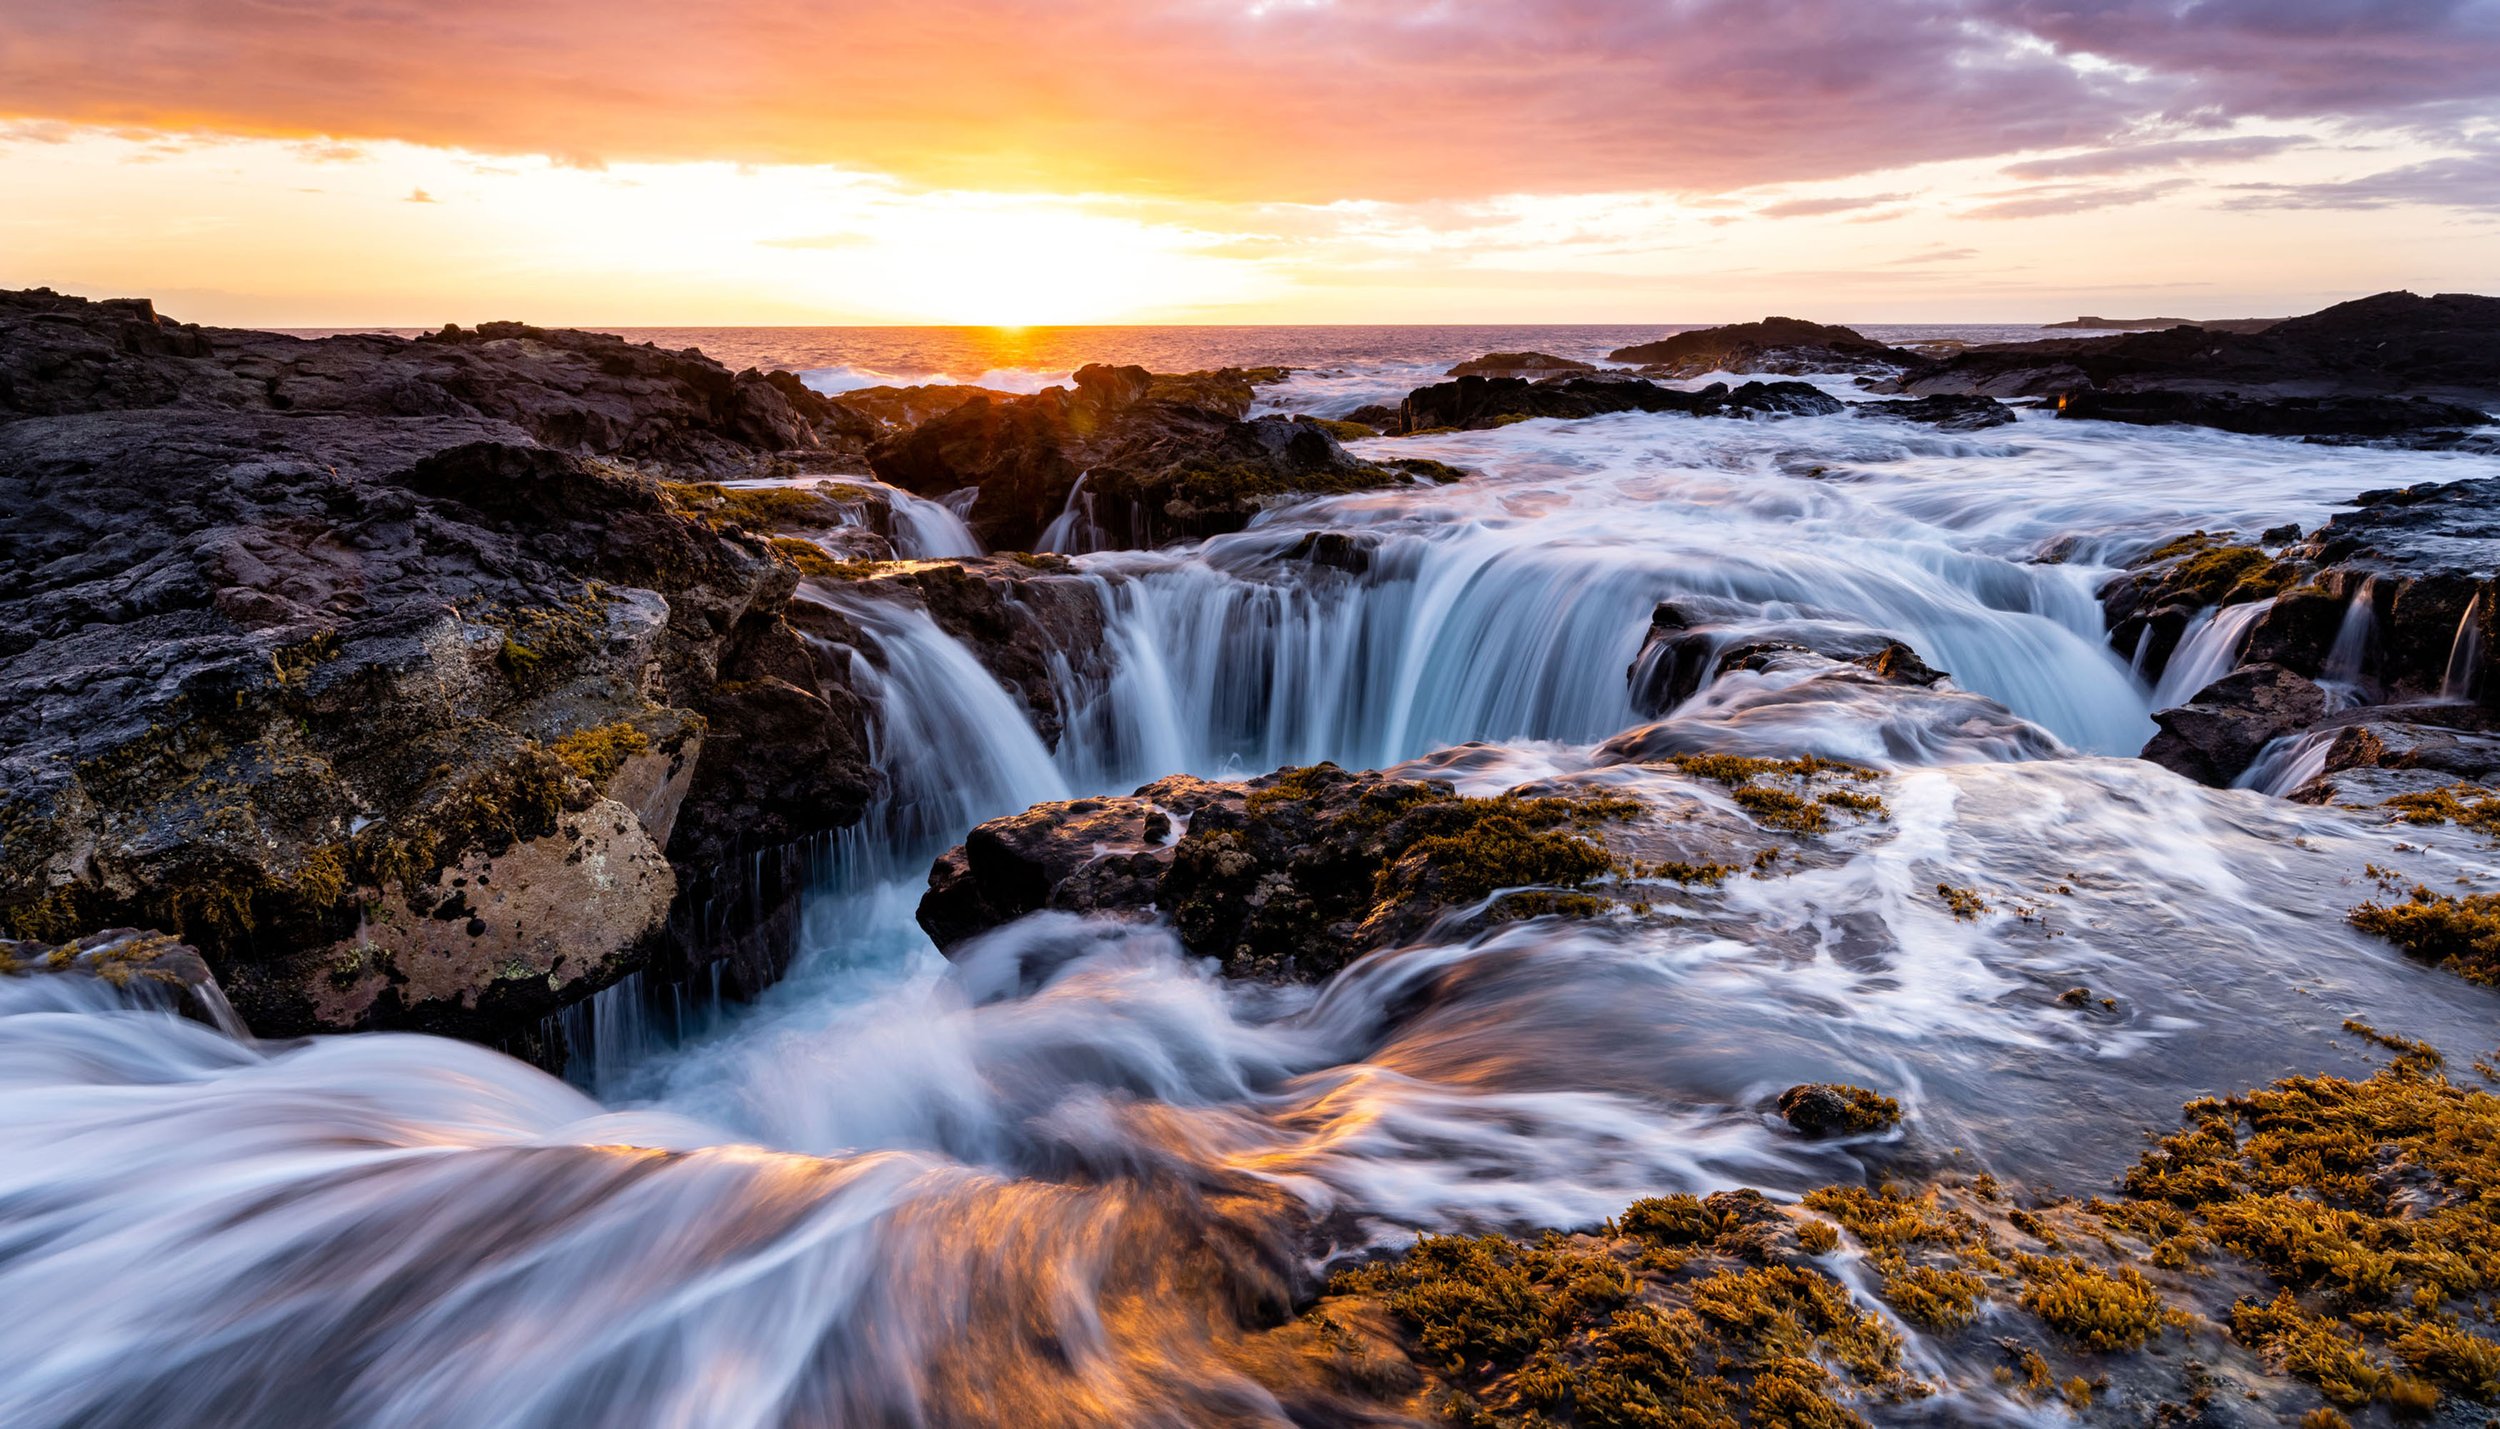  Landscape: Waves crash on the rocky coastline at sunset near Kona, Big Island, Hawaii 